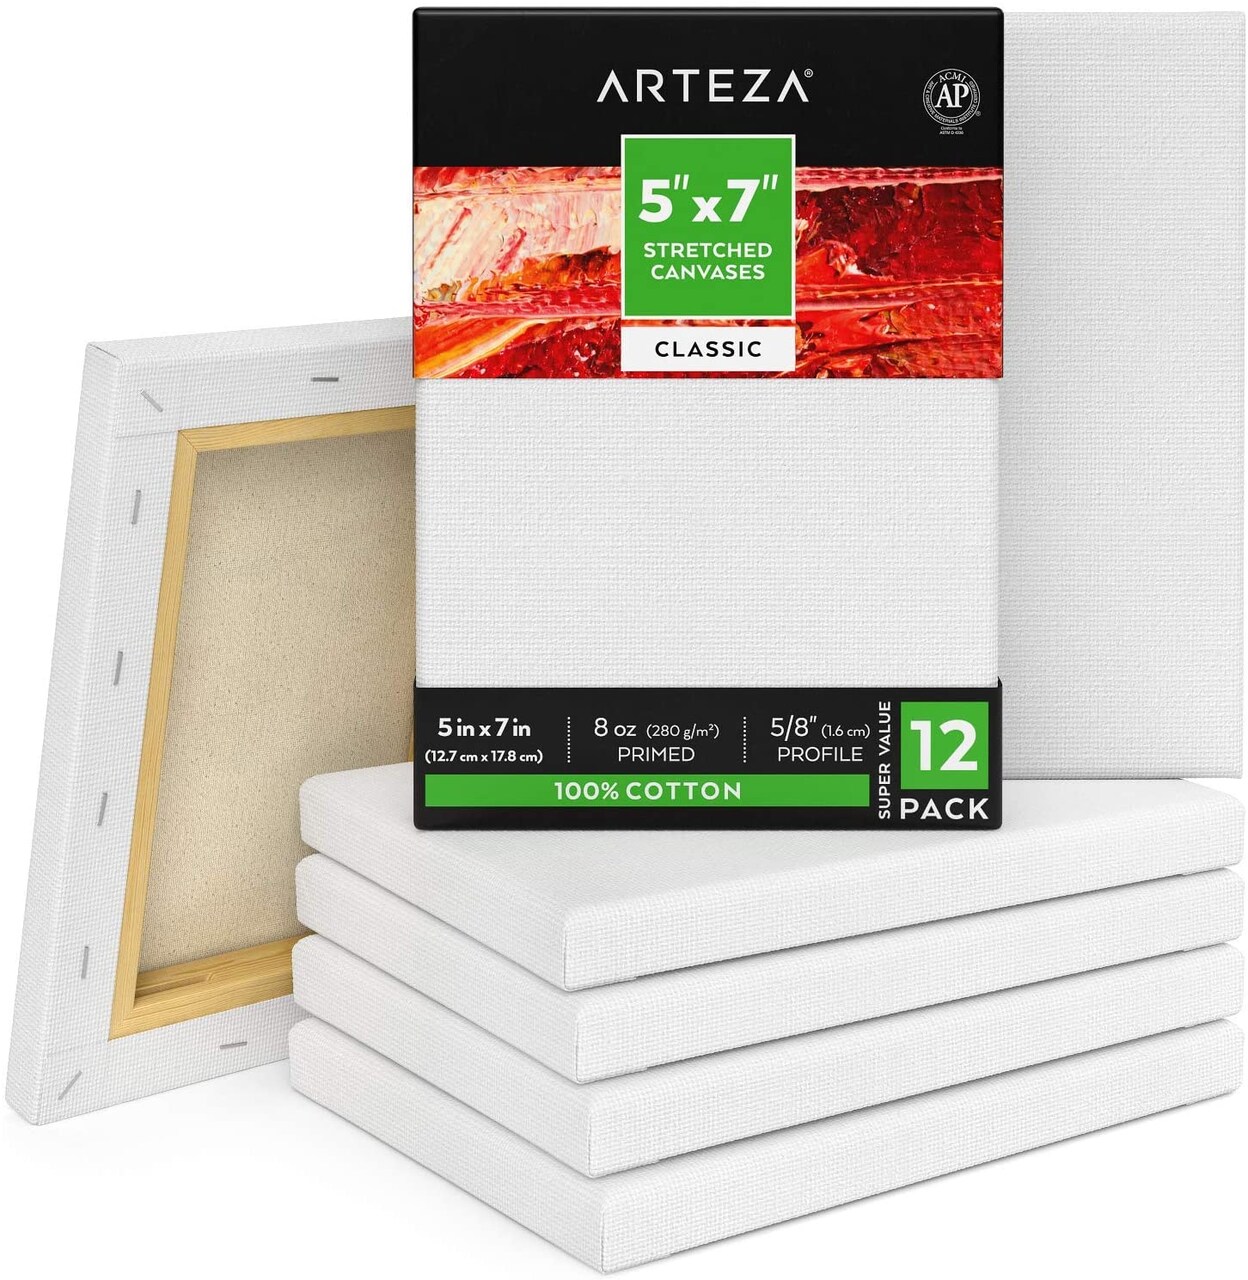 Arteza Stretched Canvas, Classic, White, 5x7, Blank Canvas